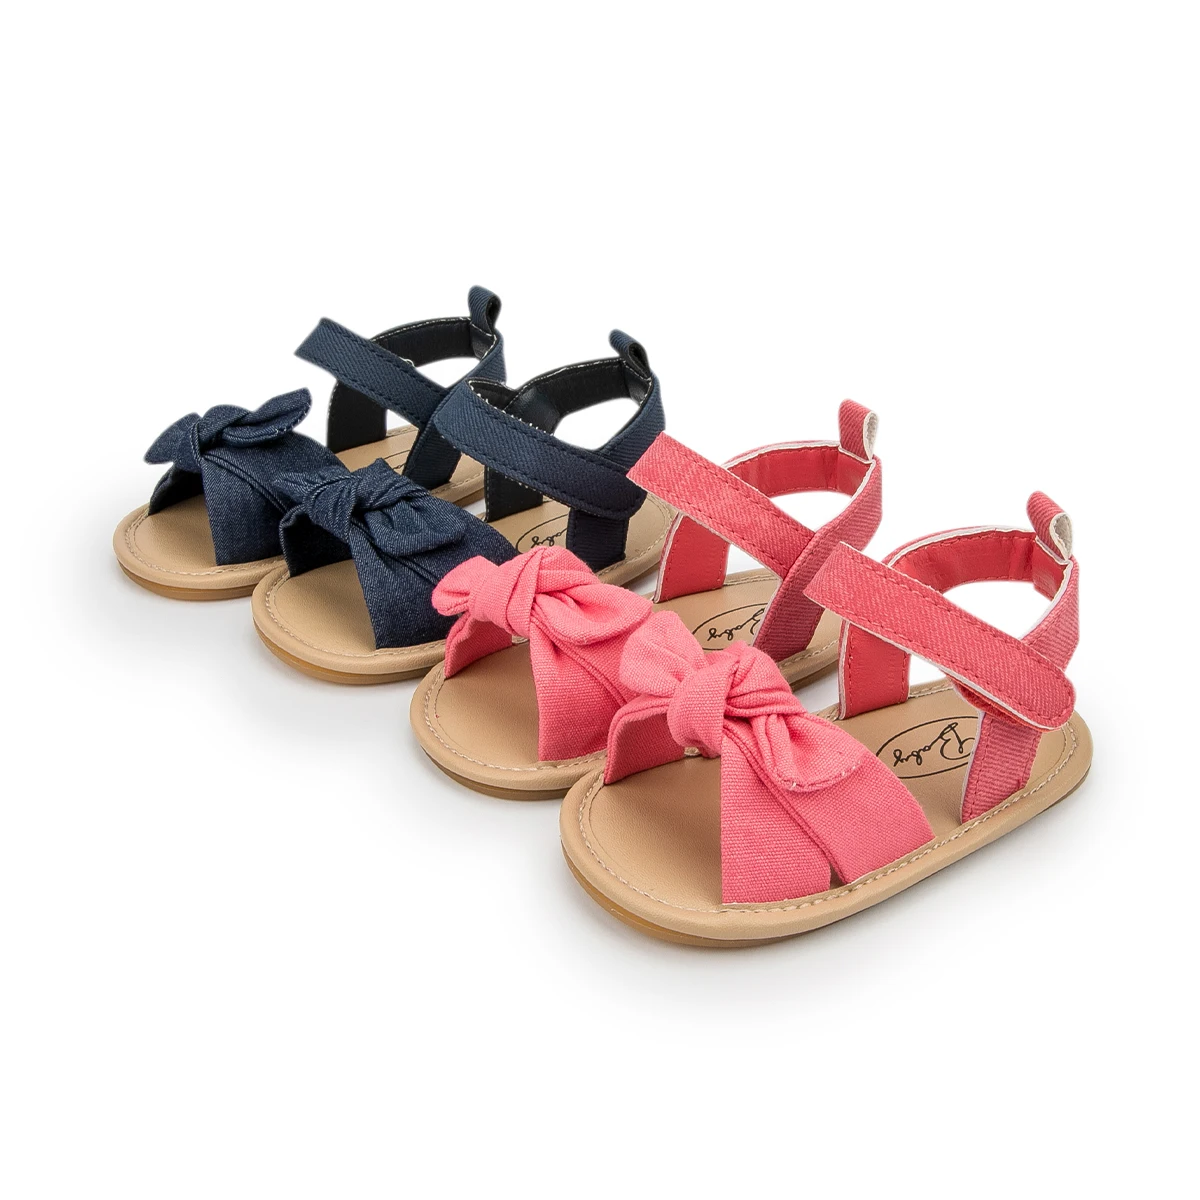 New Arrival Rubber Soft Sole Walking Shoes Bebe Toddler Girlanti-Slip Prewalk Baby Sandals For Girls